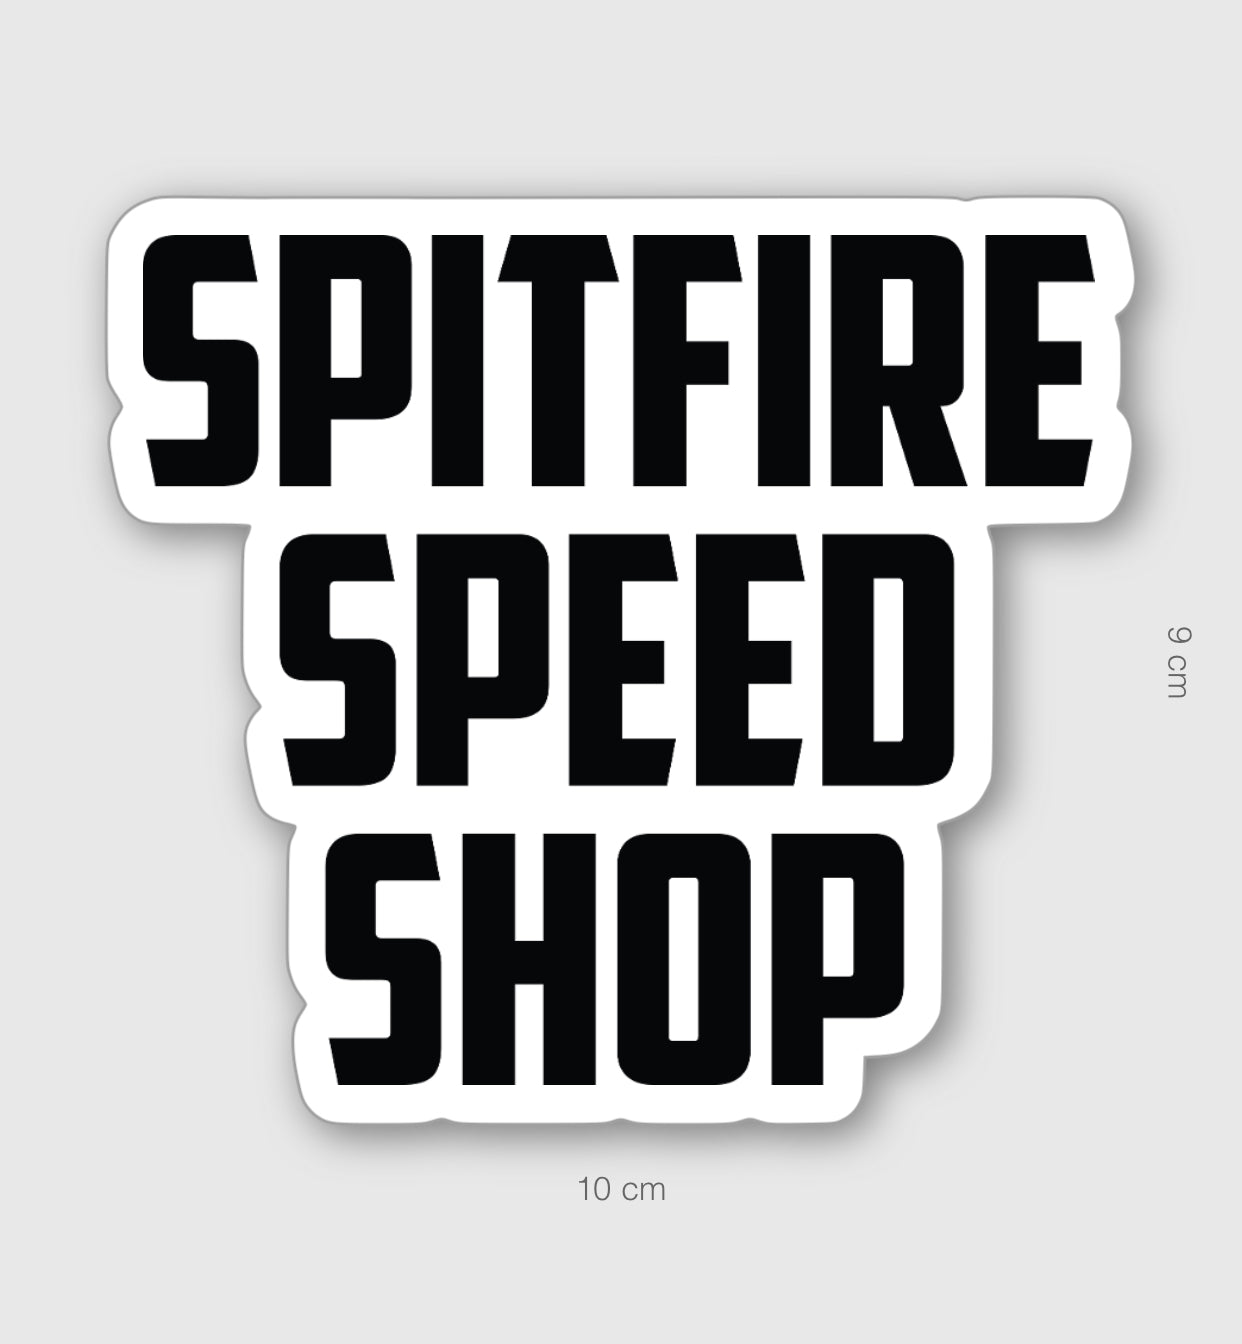 Spitfire Text Sticker Large